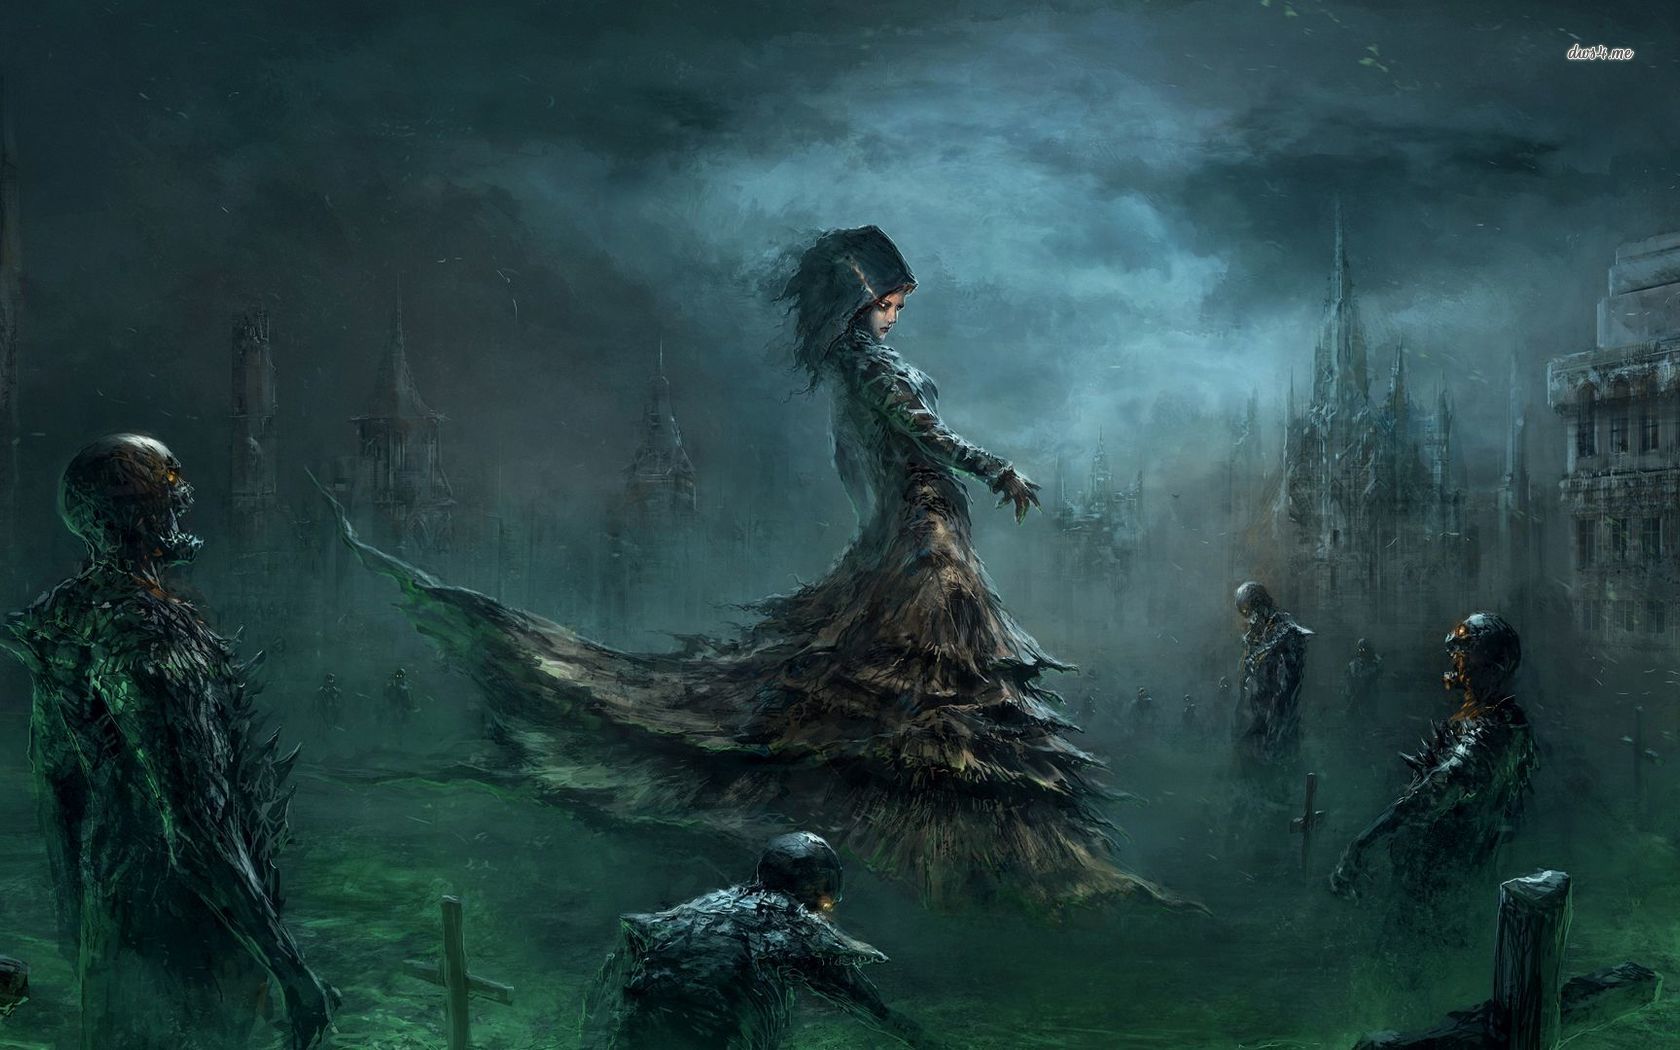 Dark woman and zombies wallpaper - Fantasy wallpapers -